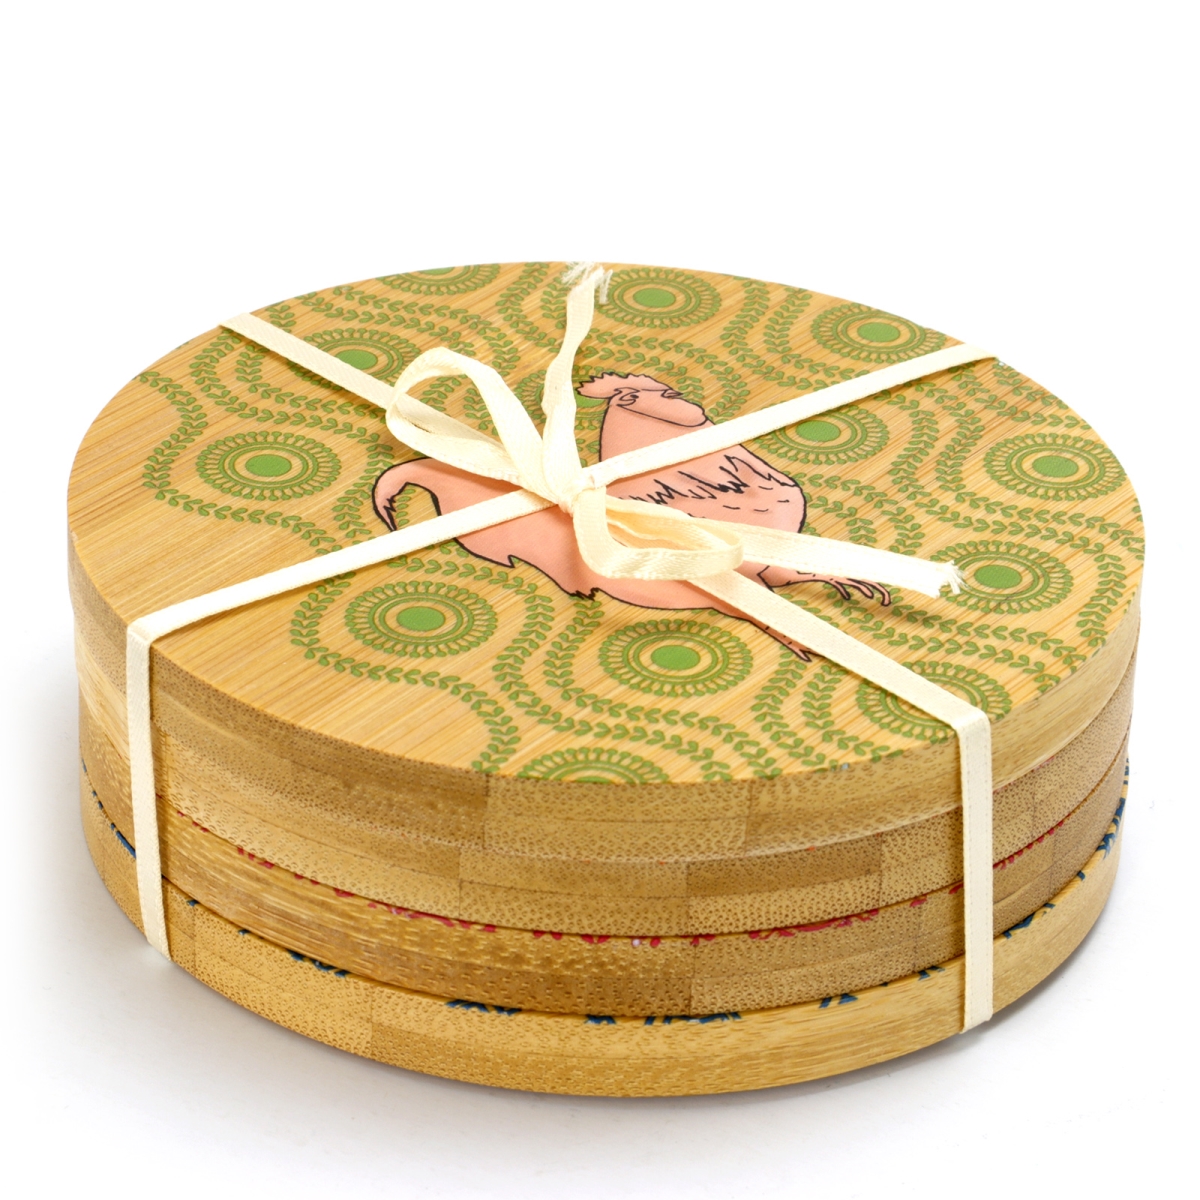 122886.04 Bamboo Coaster Set With Decorative Farm Animals - 4 Piece